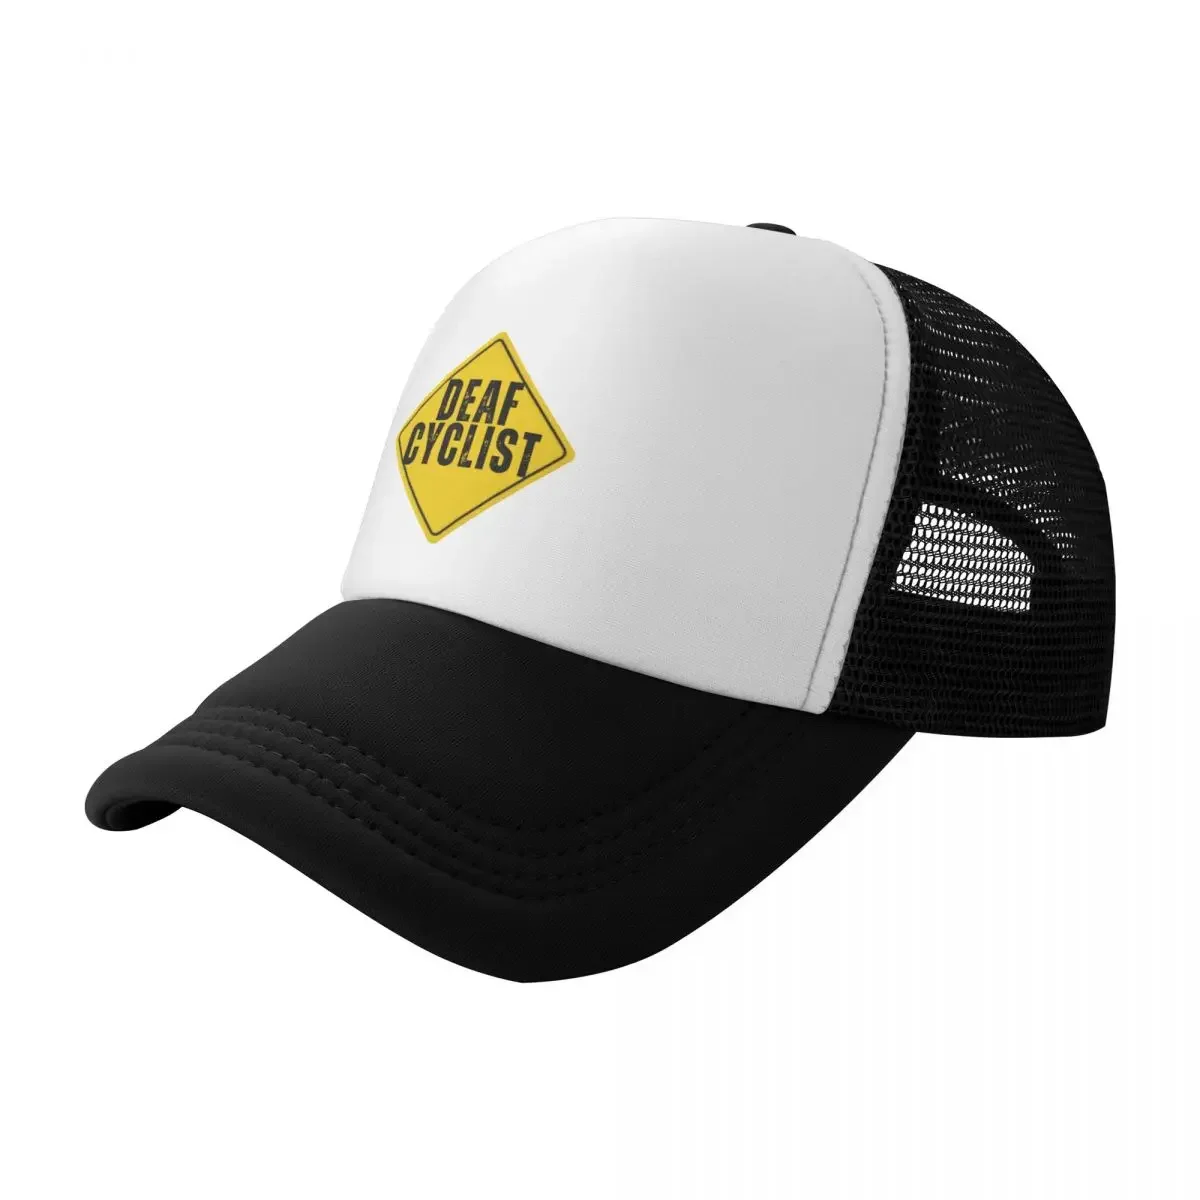 

Deaf Cyclist Warning Baseball Cap Golf Hat New Hat Caps Women Men's